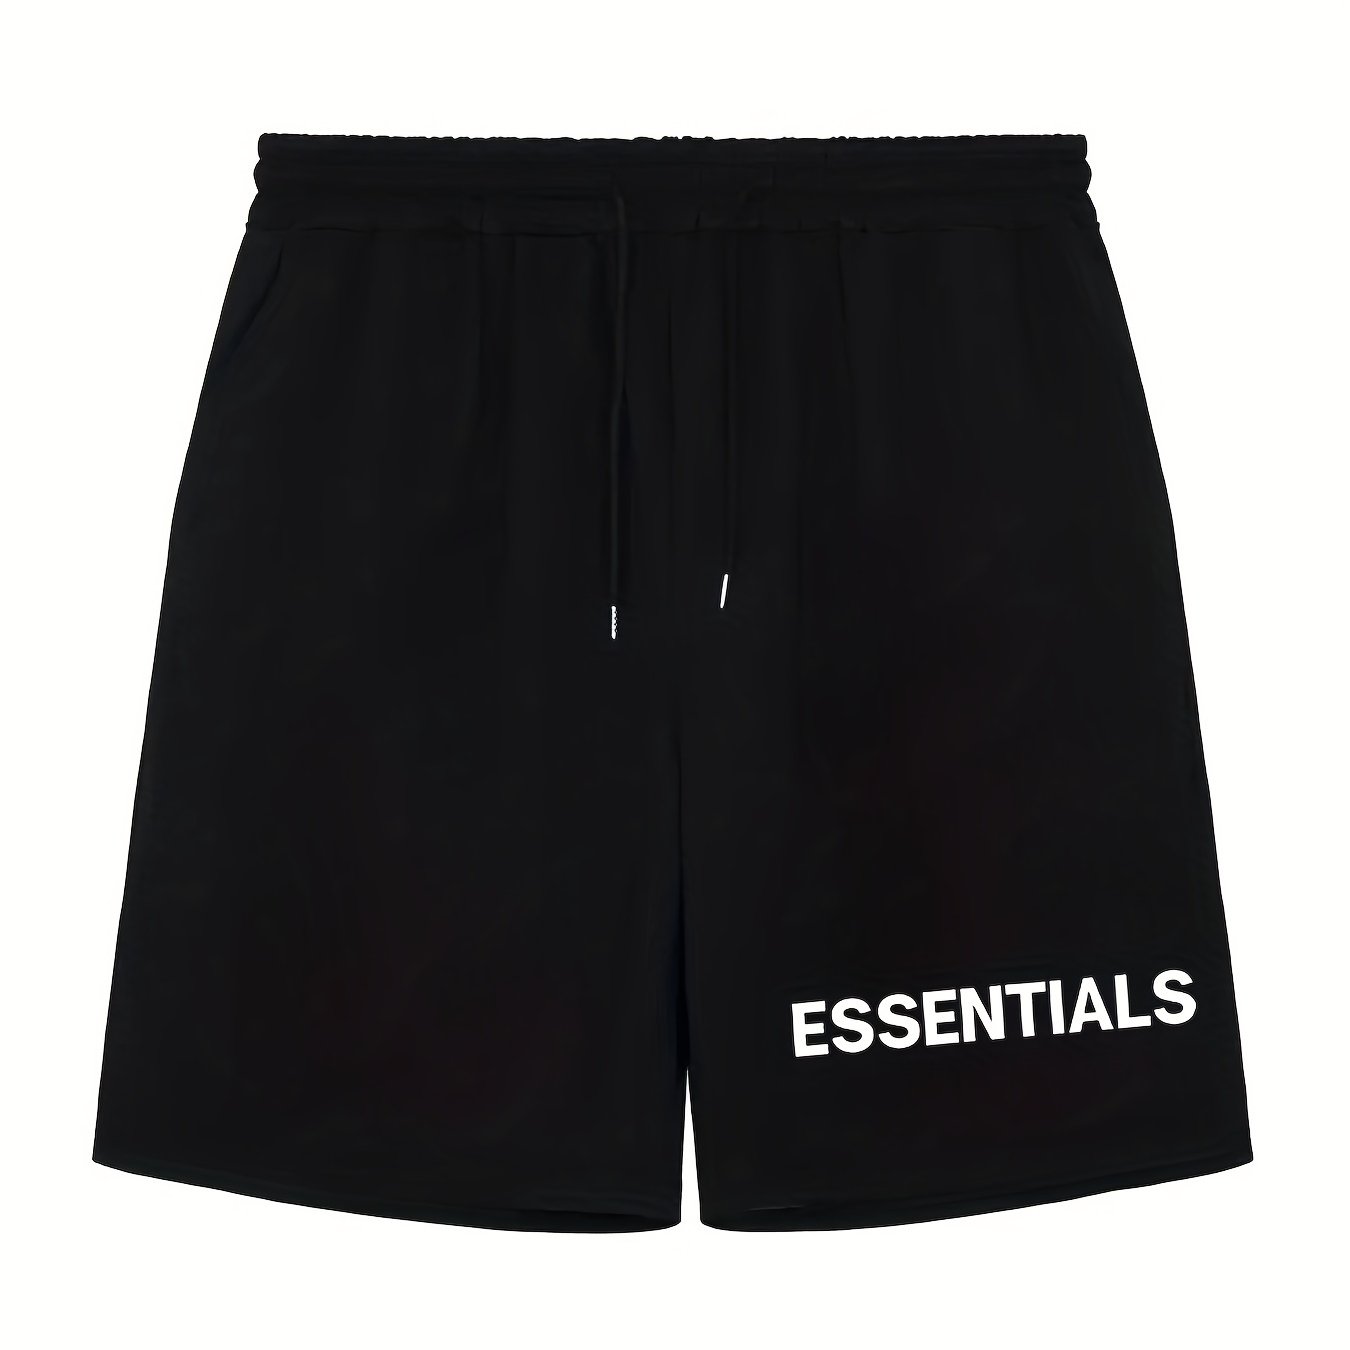 「lovevop」Funny Unisex Print, Men's Shorts, Summer Casual Loose Wear, Elastic Waist Drawstring Shorts